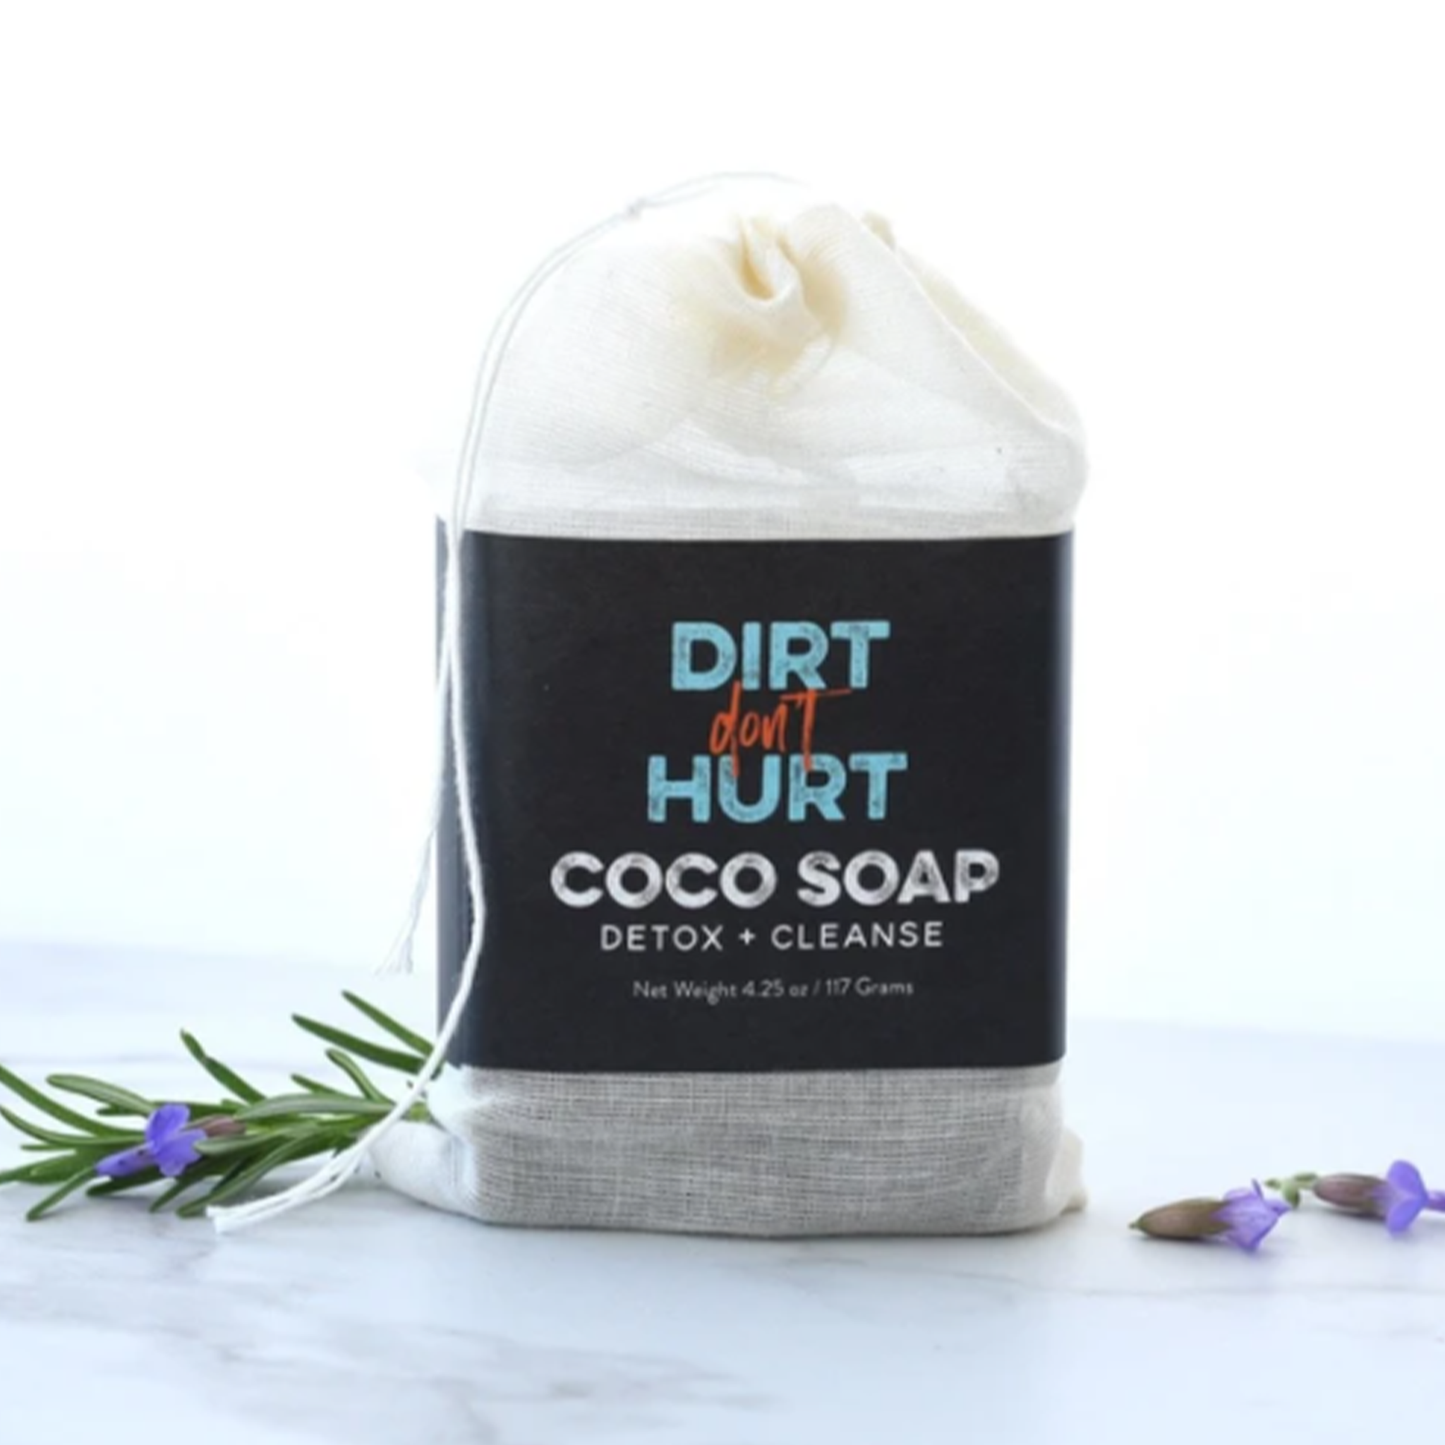 Dirt Don't Hurt Detox + Cleanse Charcoal Body Soap